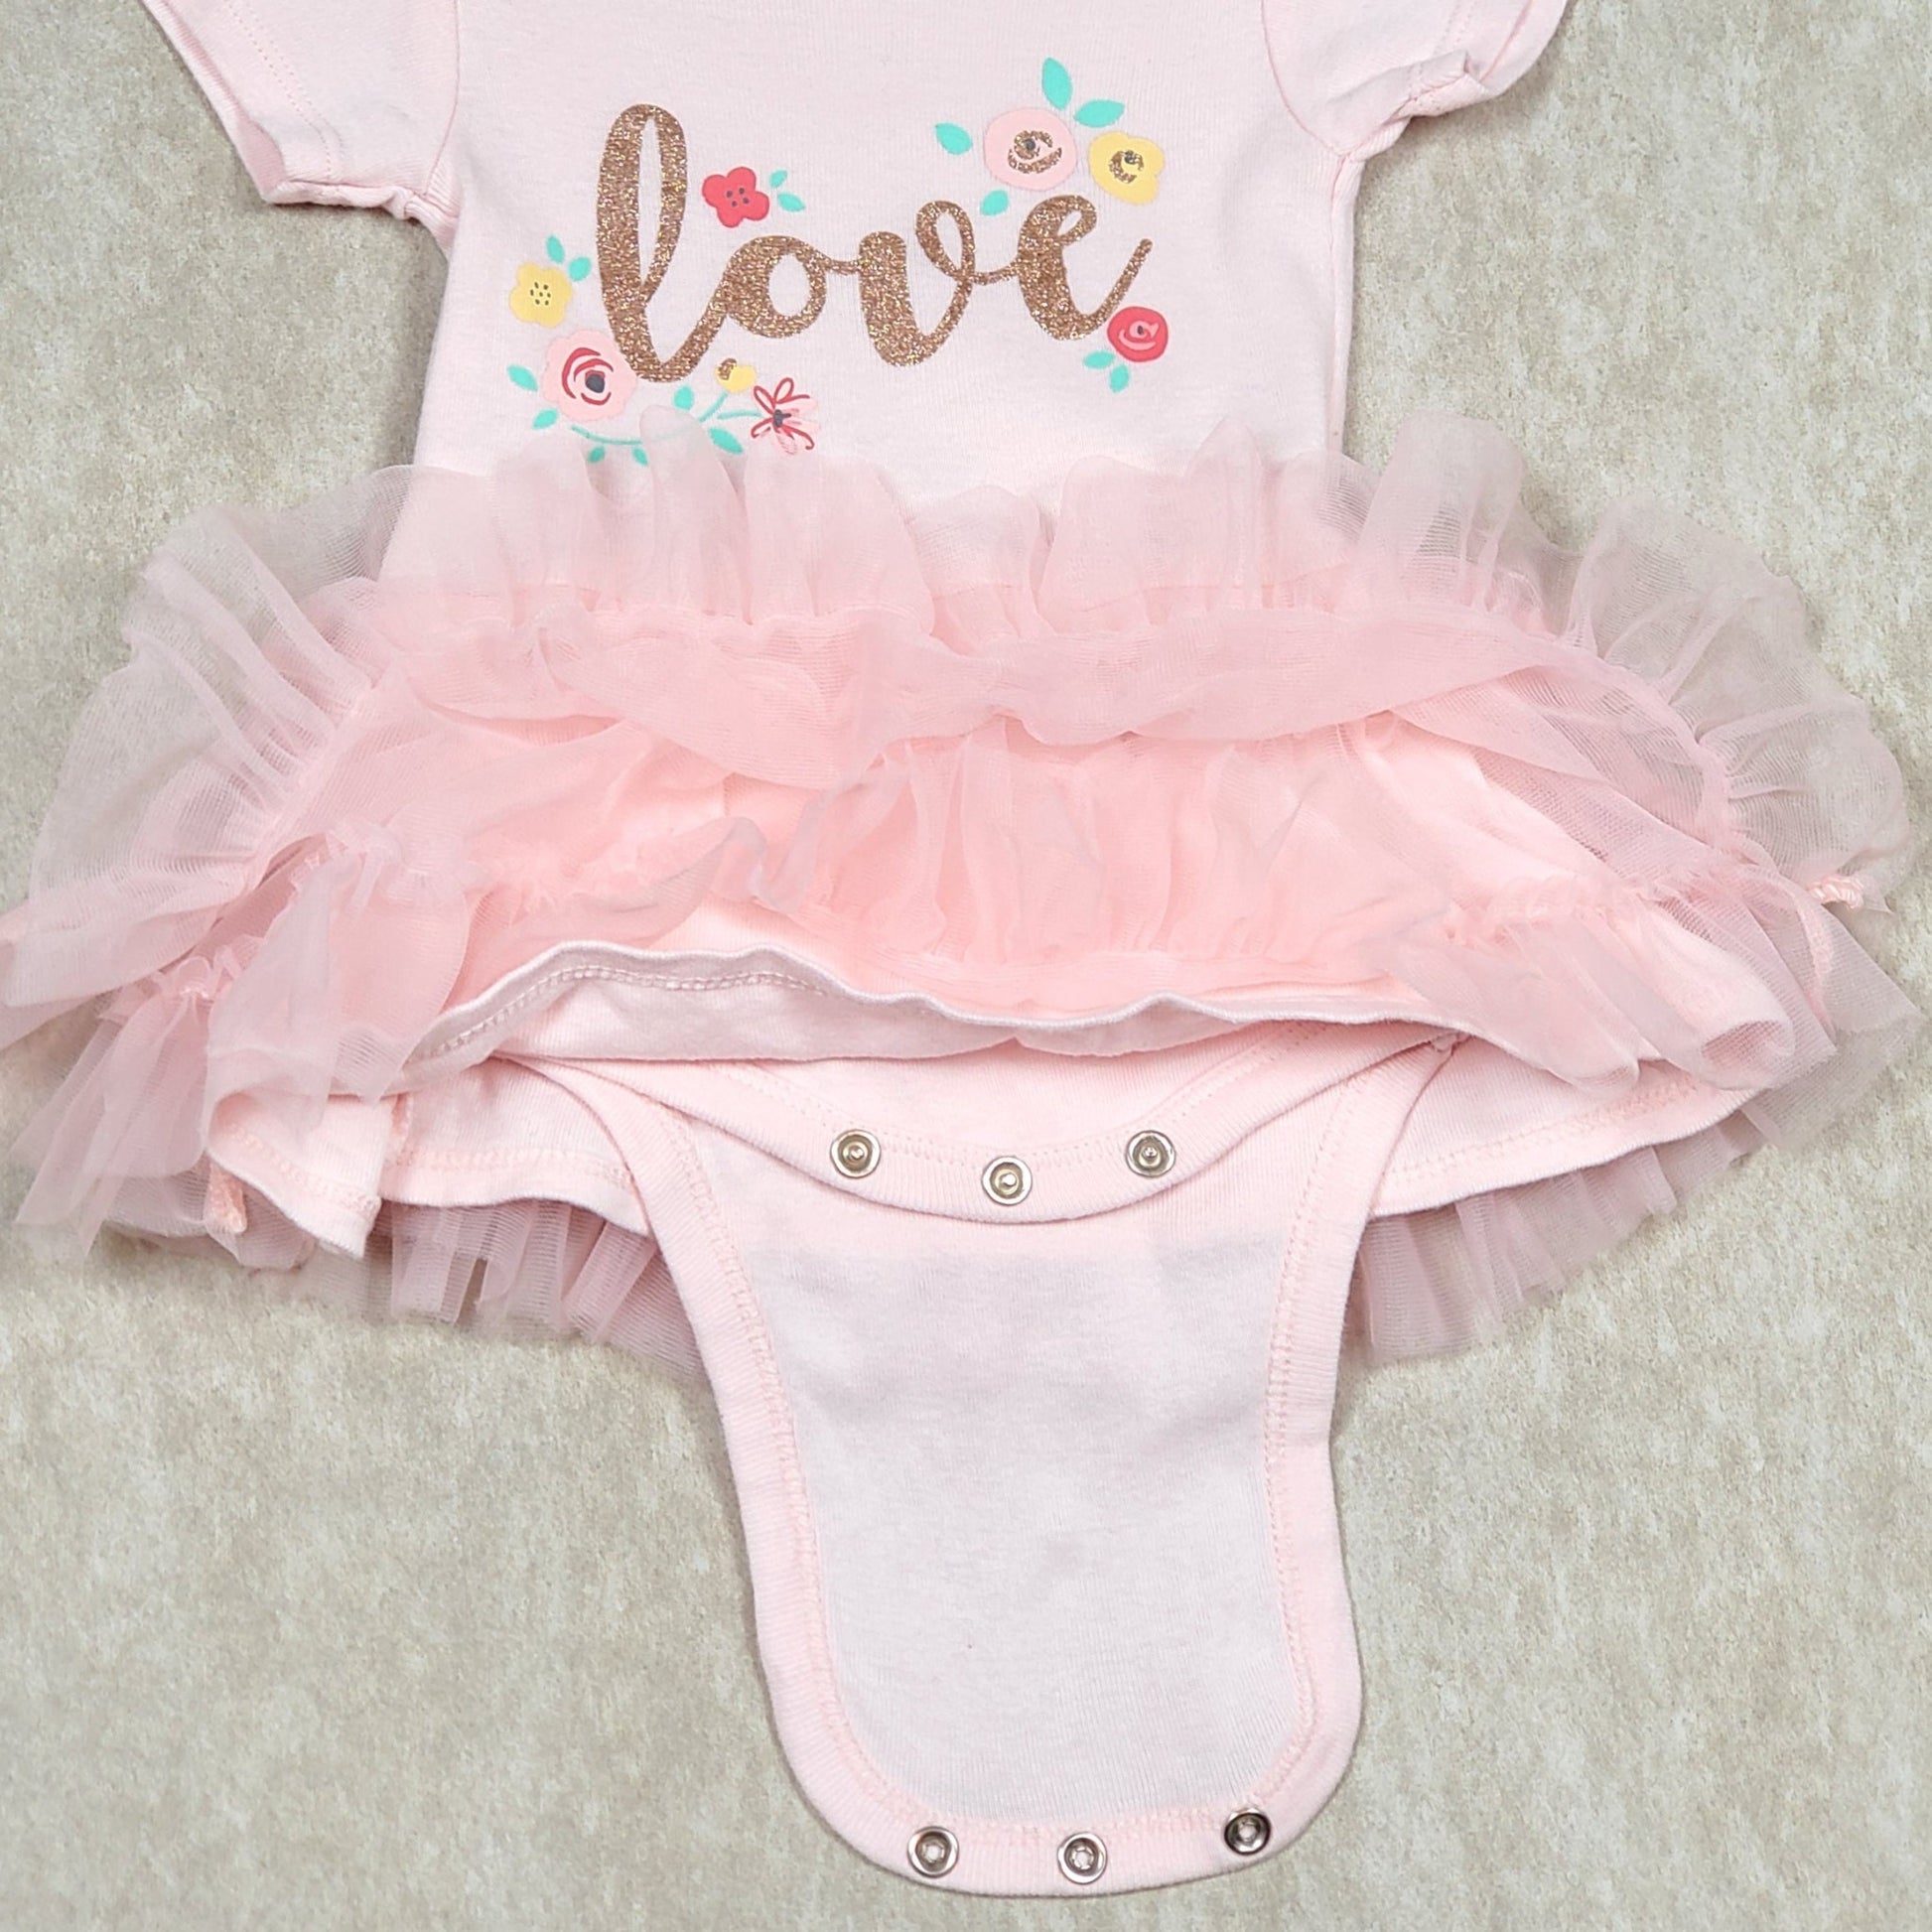 Gerber Baby Girls Pink Love Tutu Bodysuit 3M Used, leg closures